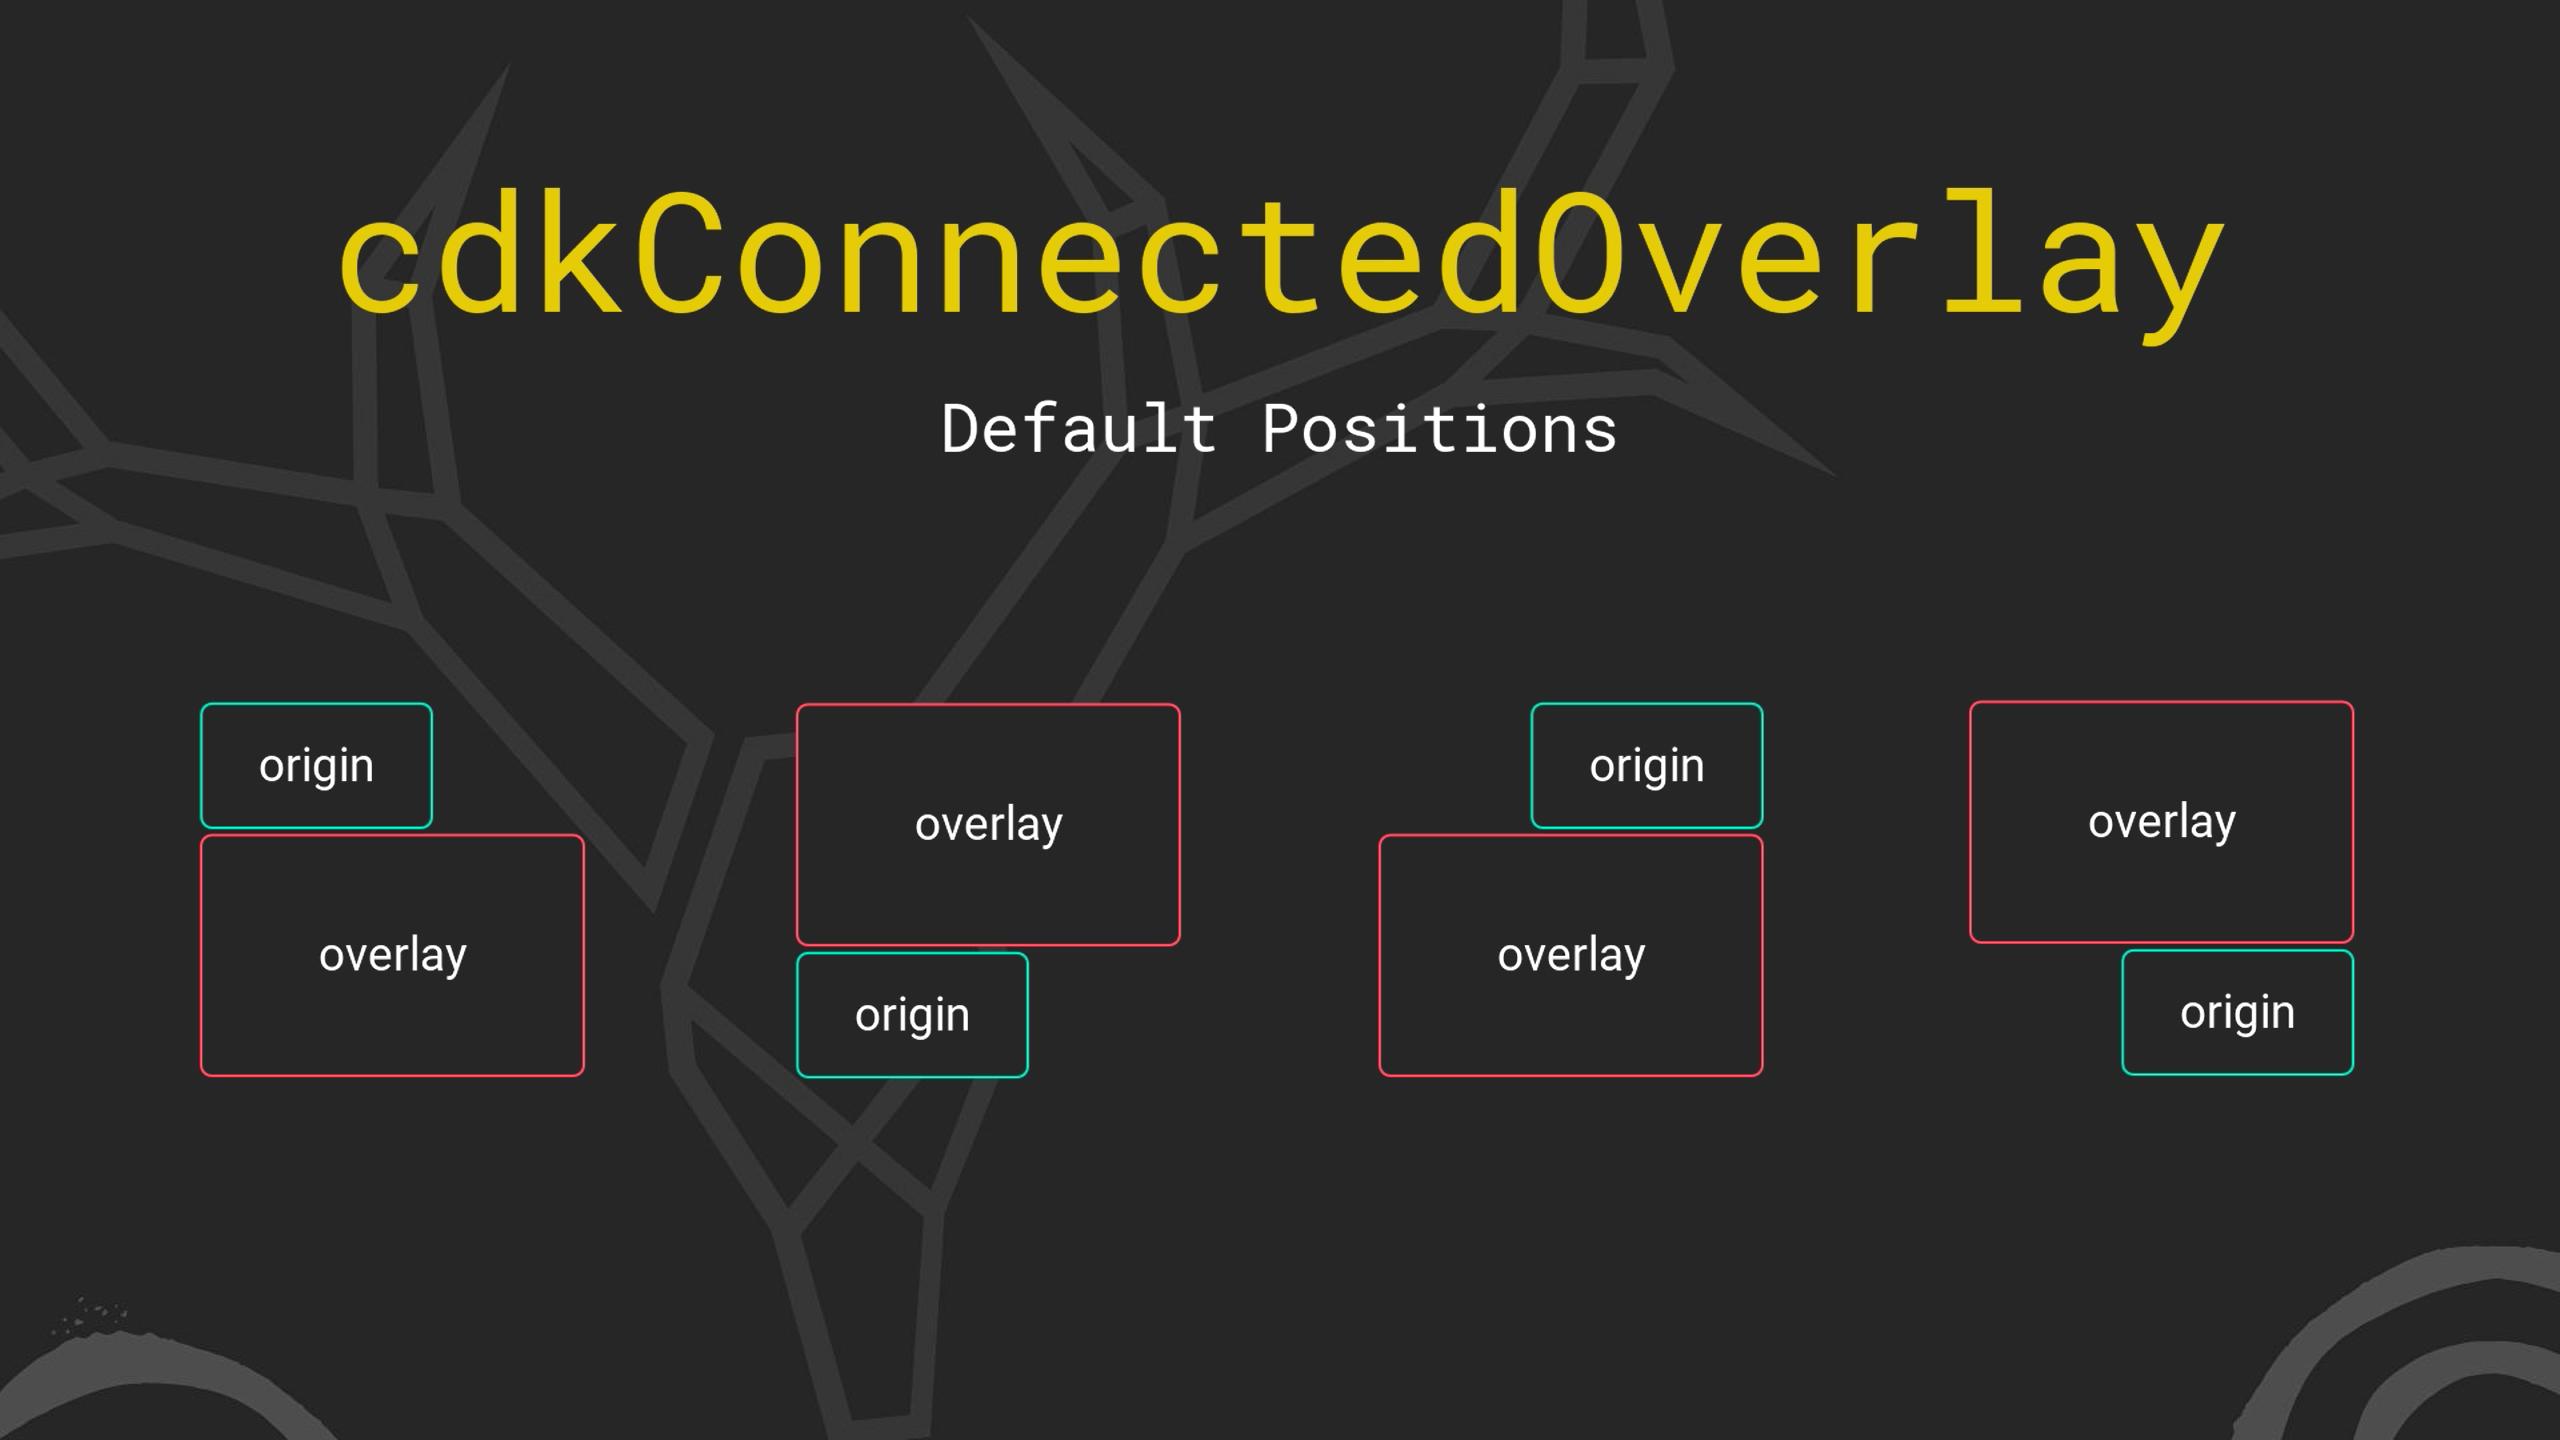 Angular CDK Connect Overlay default positions diagram